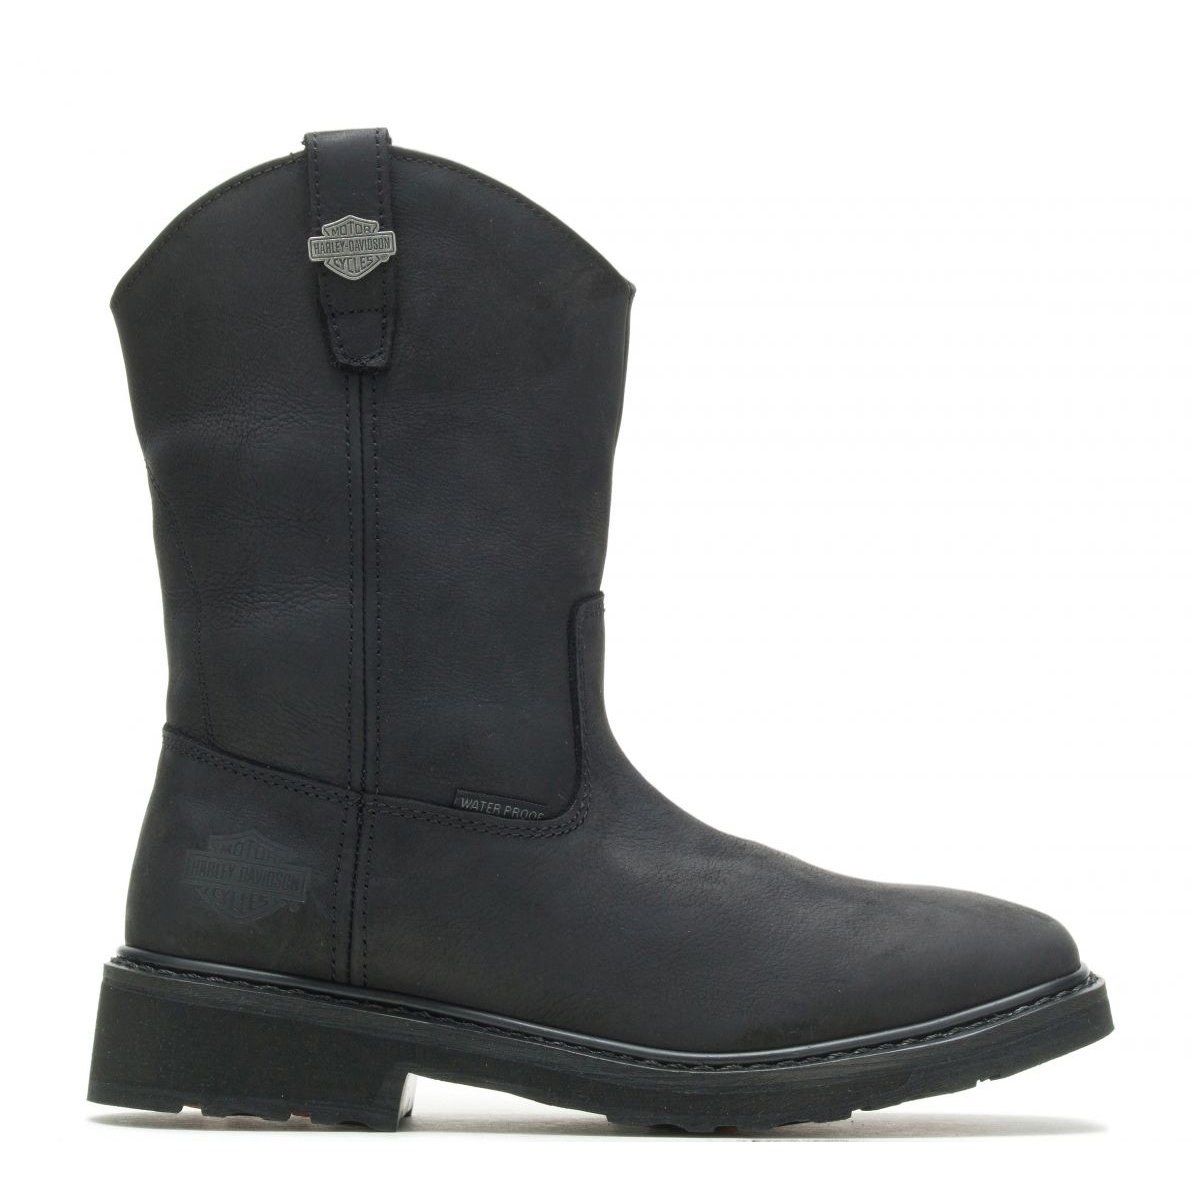 HARLEY-DAVIDSON WORK Men's Altman Western Classic Soft Toe Work Boot Black - D93561 Black/black - Black/black, 9